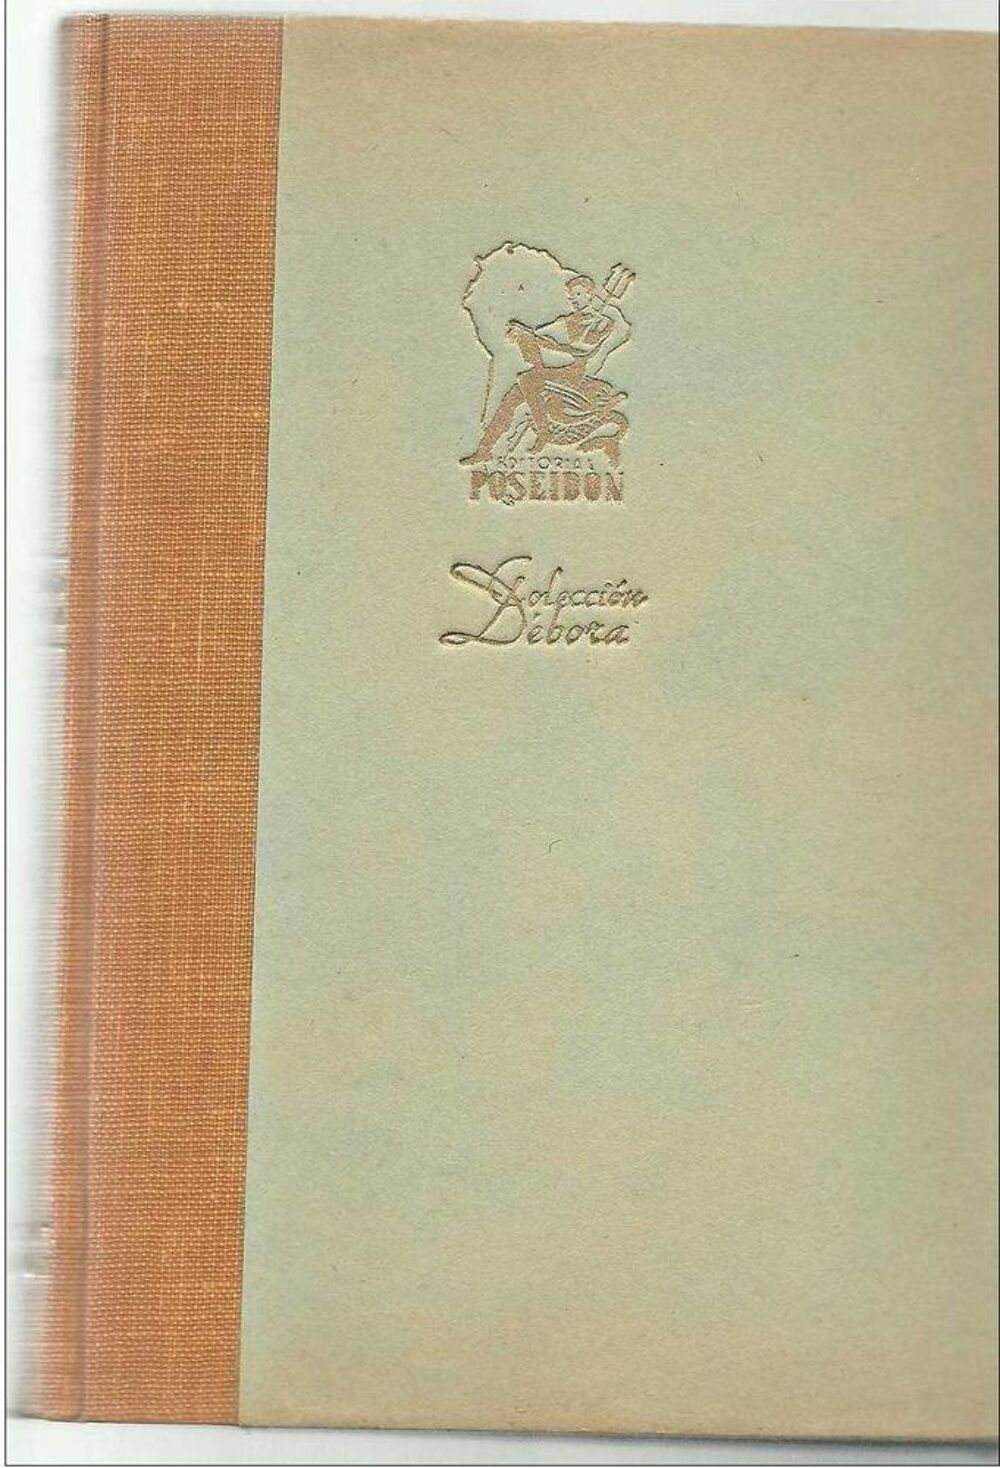 George R. STEWART : TORMENTA - Colleccion DEBORA Livres et BD